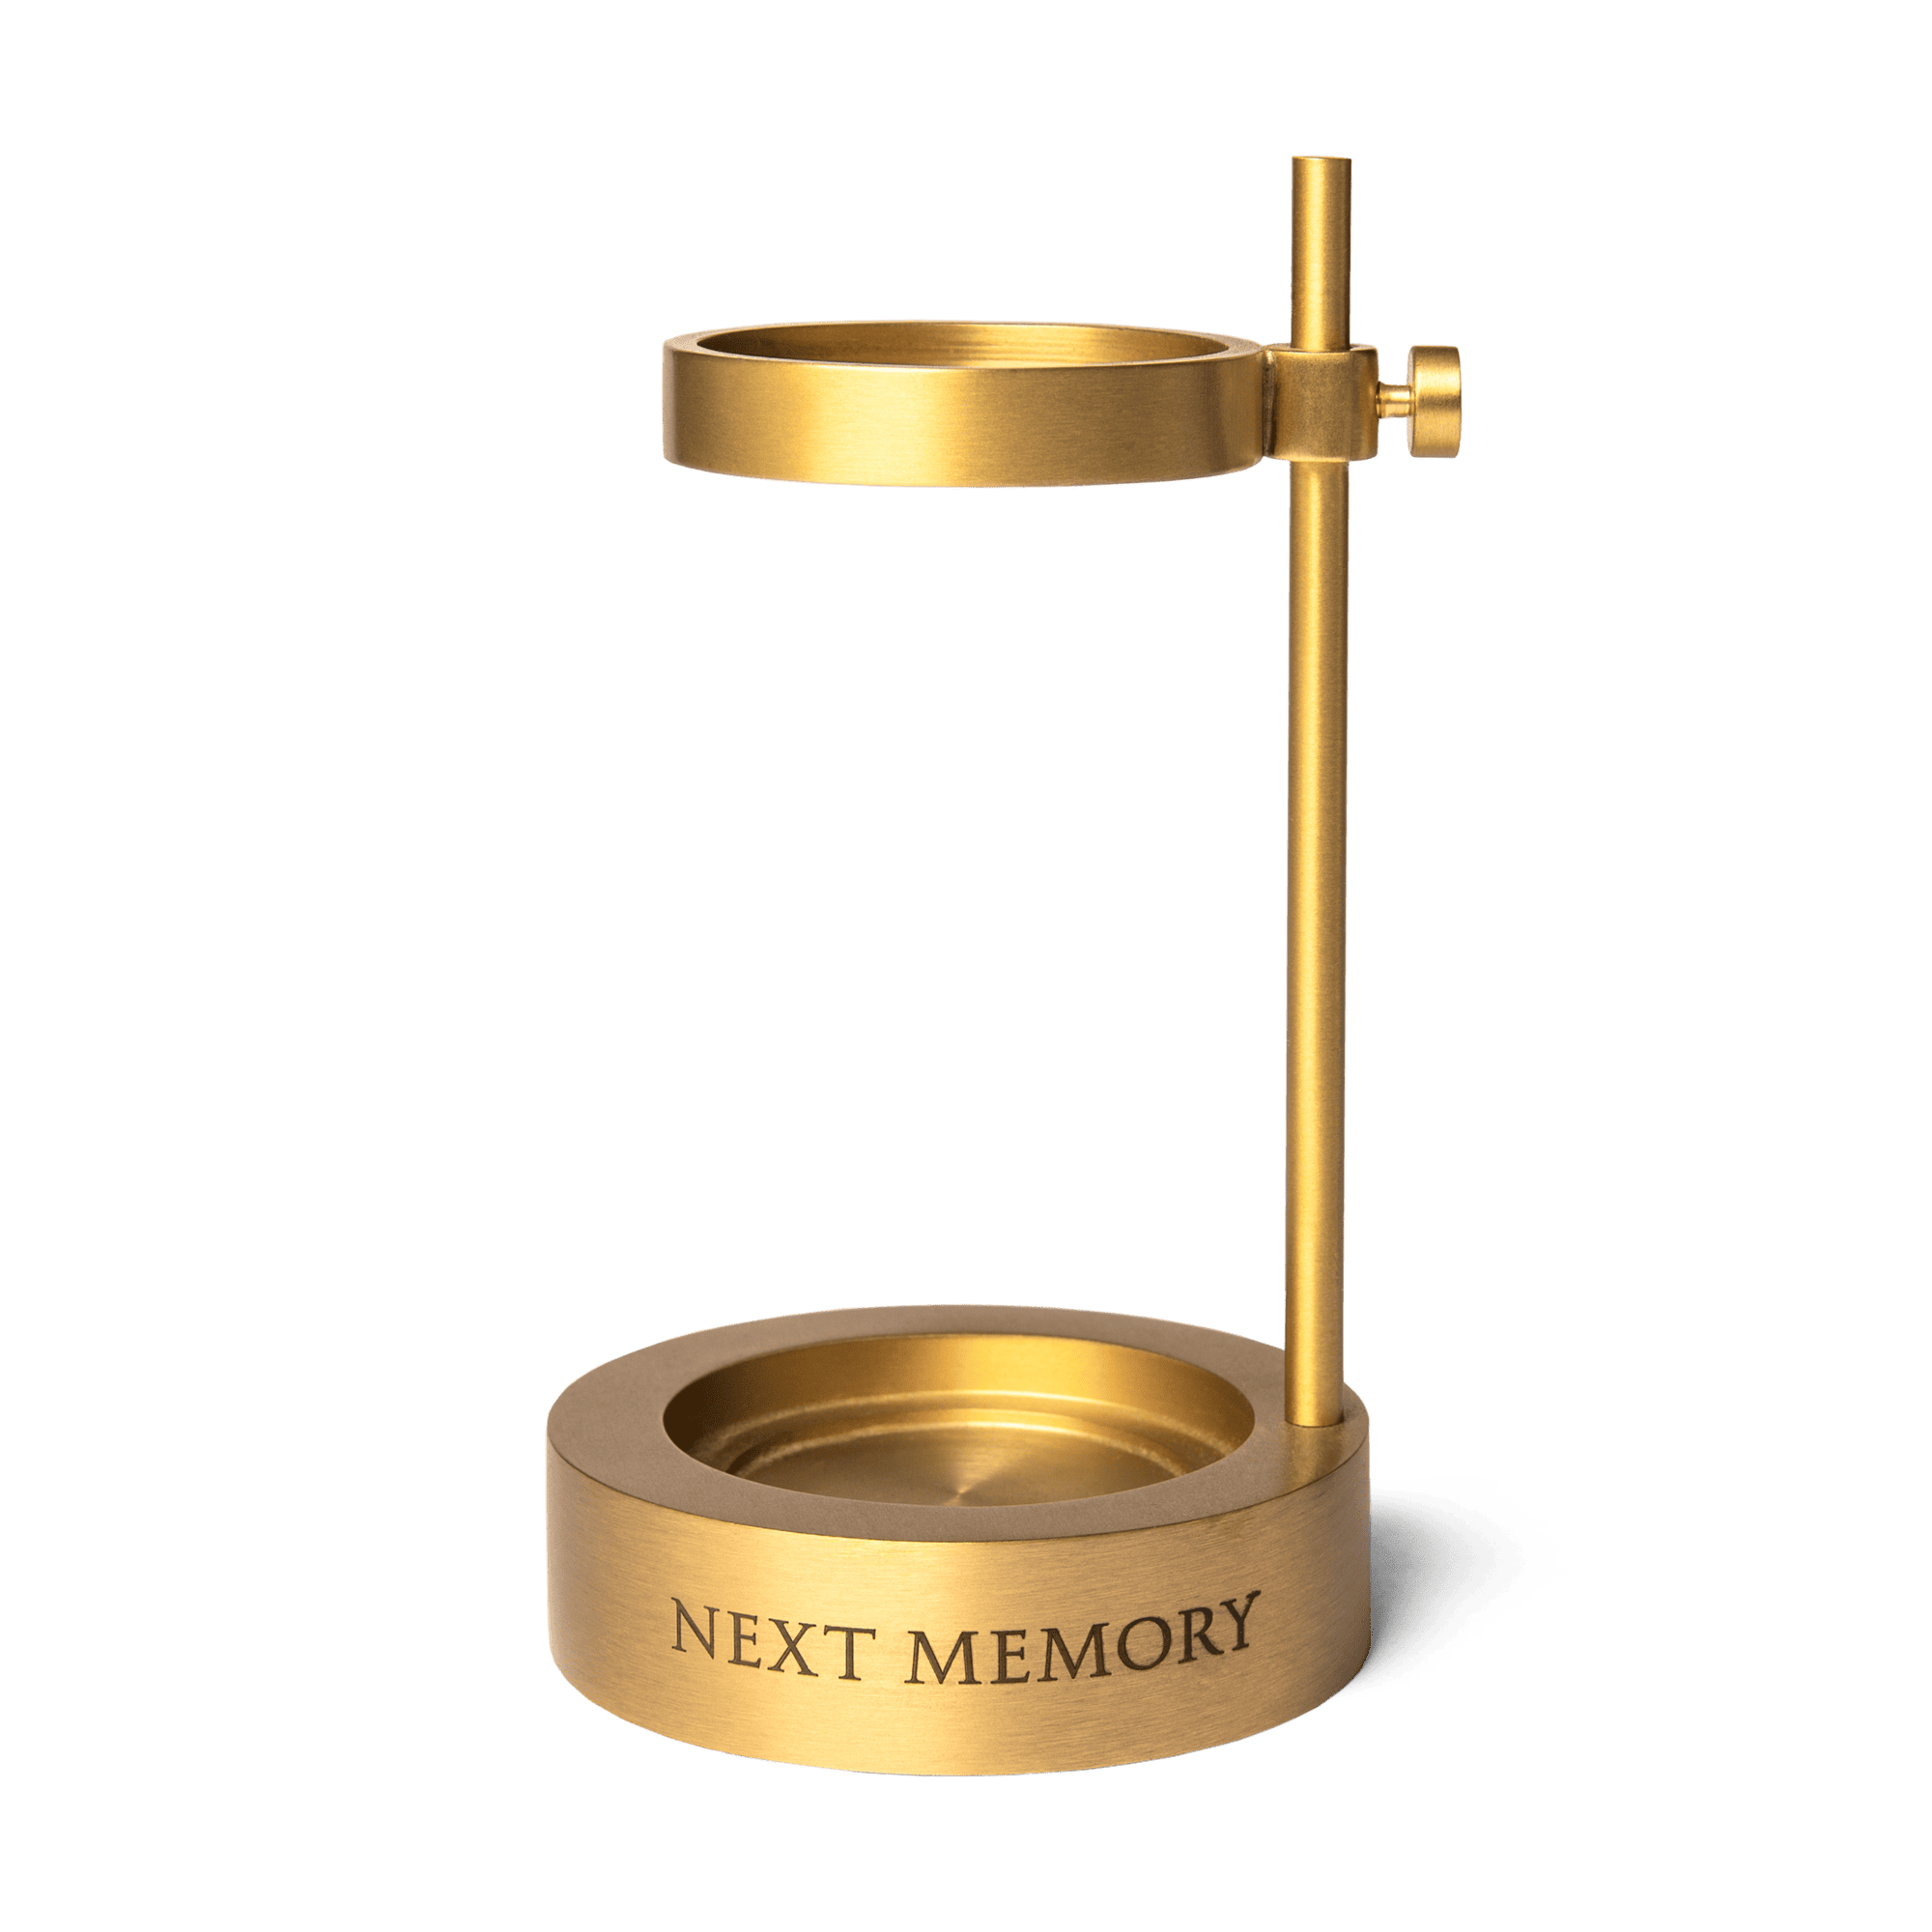 The Brass Fragrance Burner